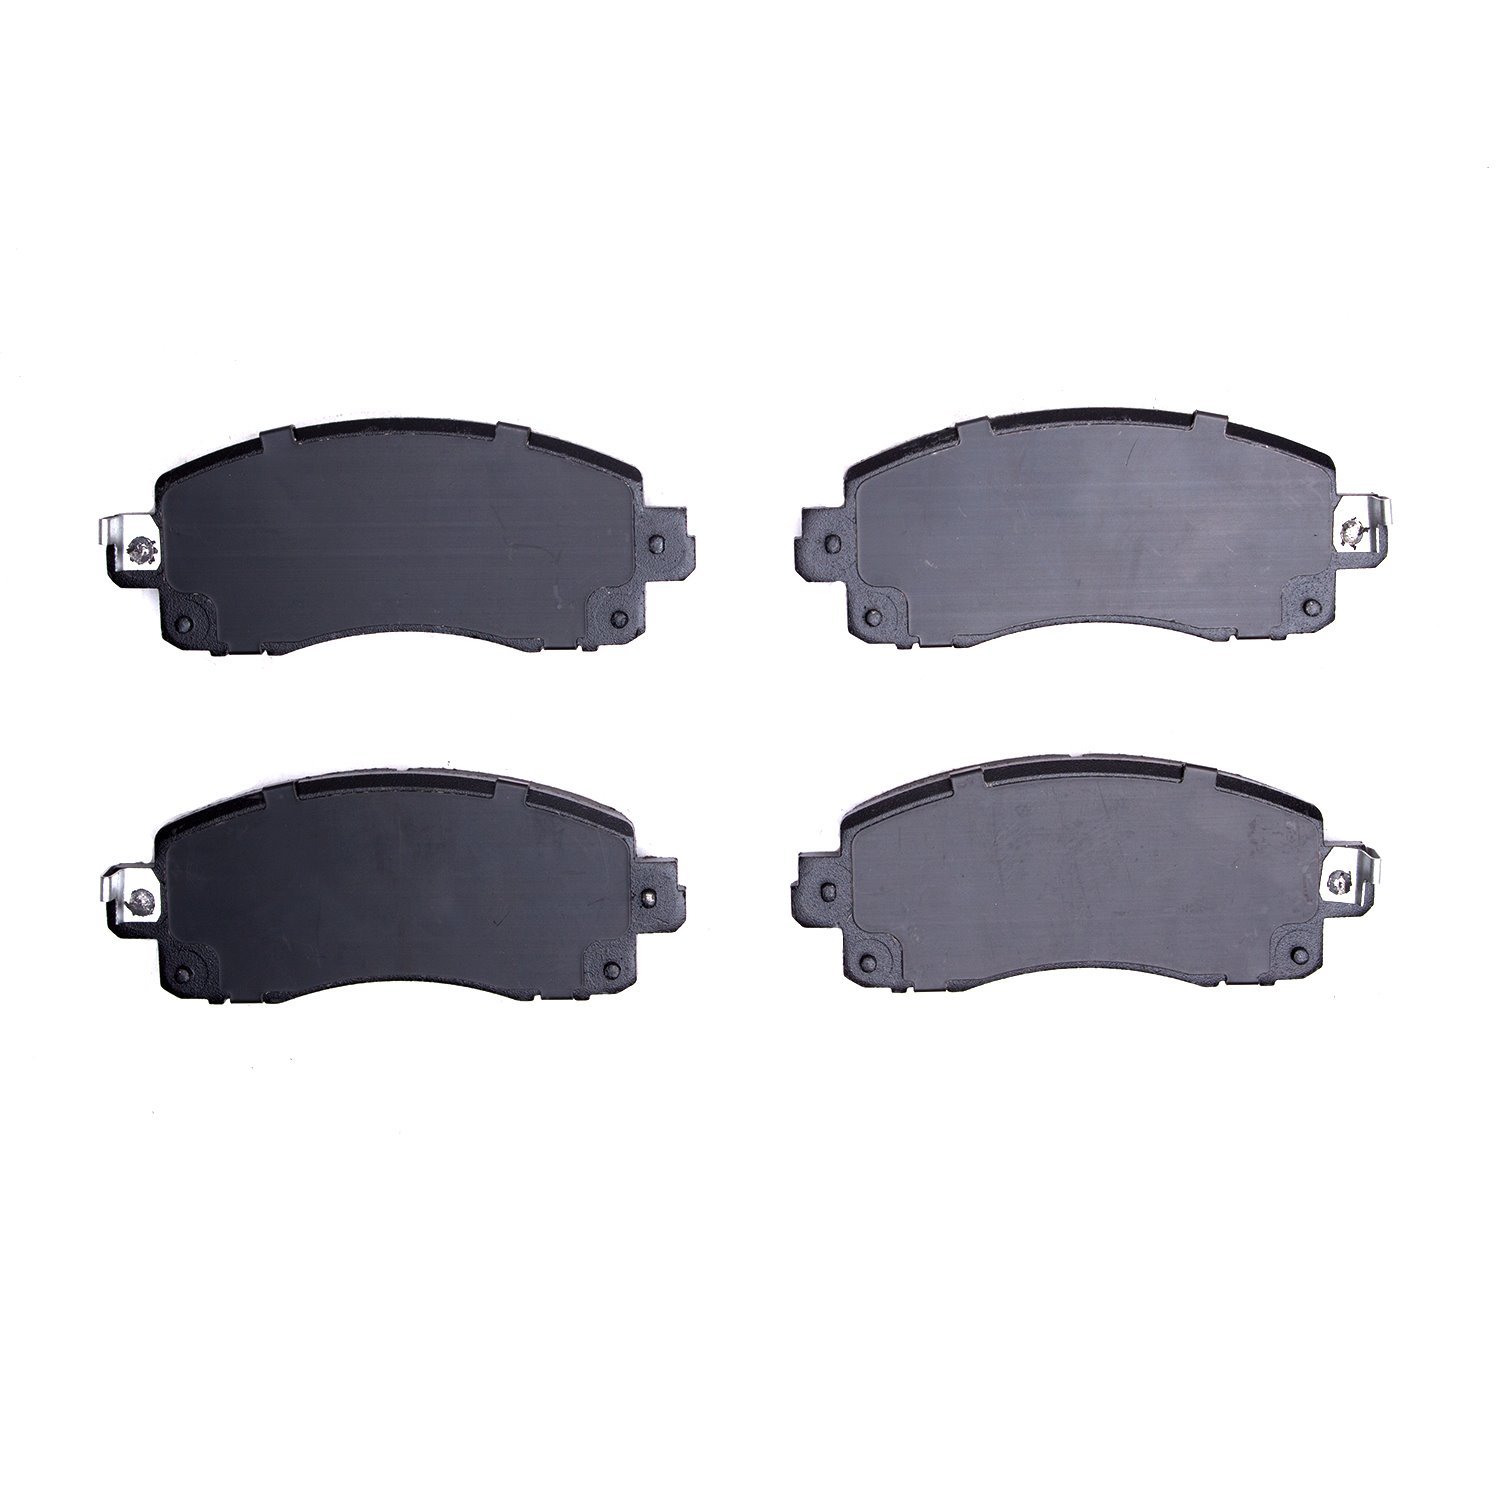 1310-2045-00 3000-Series Ceramic Brake Pads, Fits Select Subaru, Position: Front